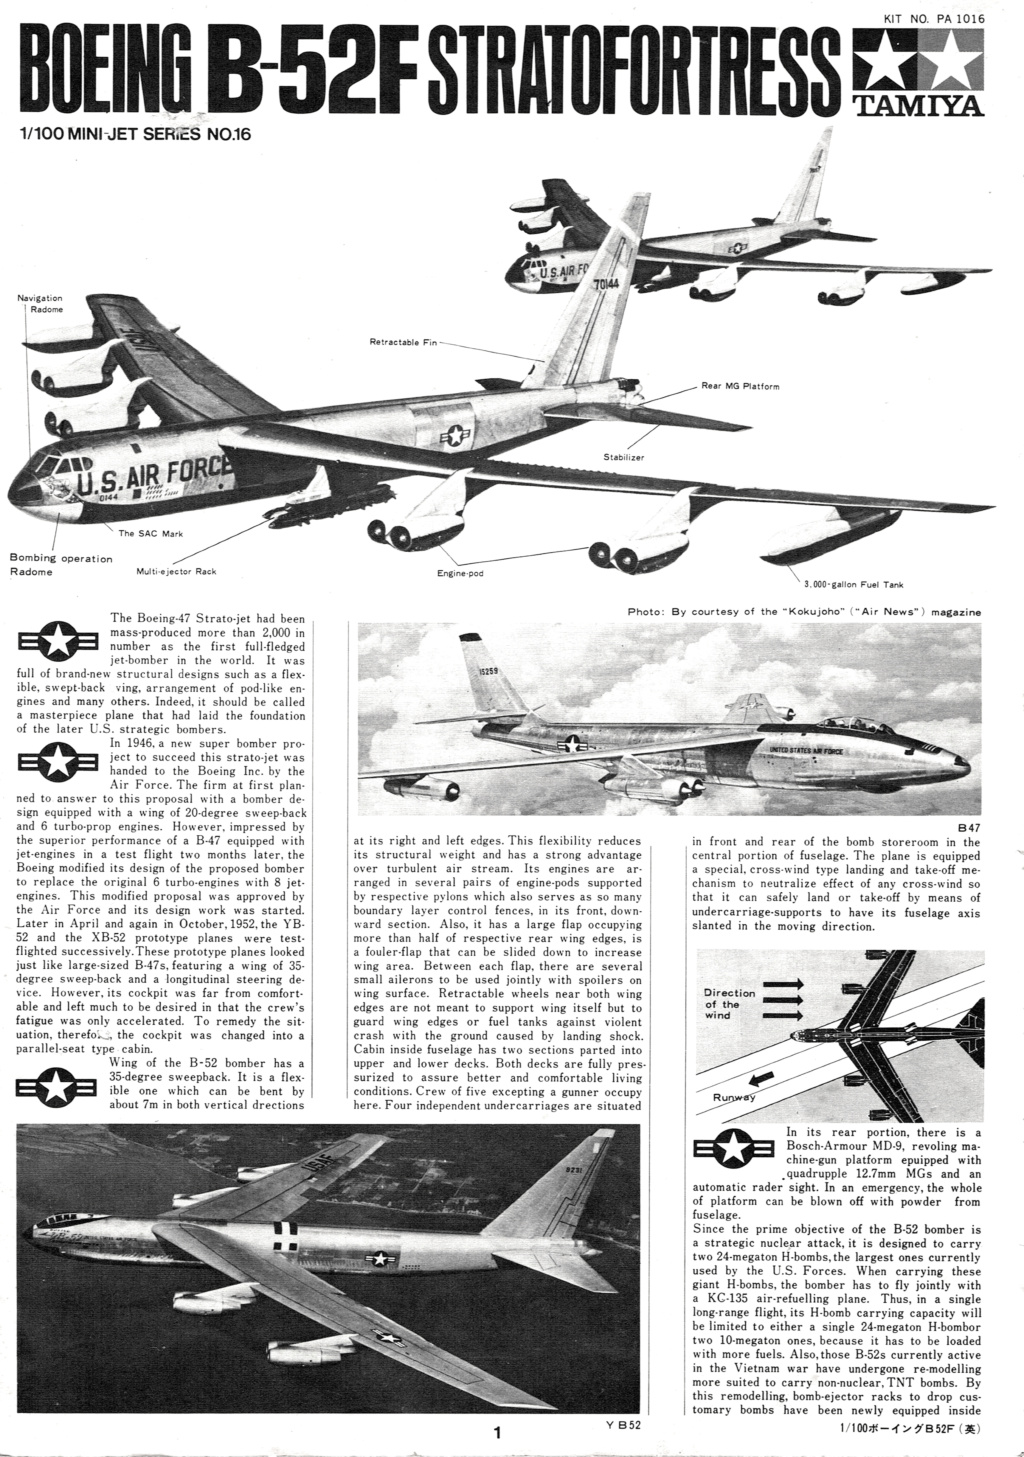 [TAMIYA] BOEING B-52 F STRATOFORTRESS 1/100ème Réf PA1016 Notice B_52_010